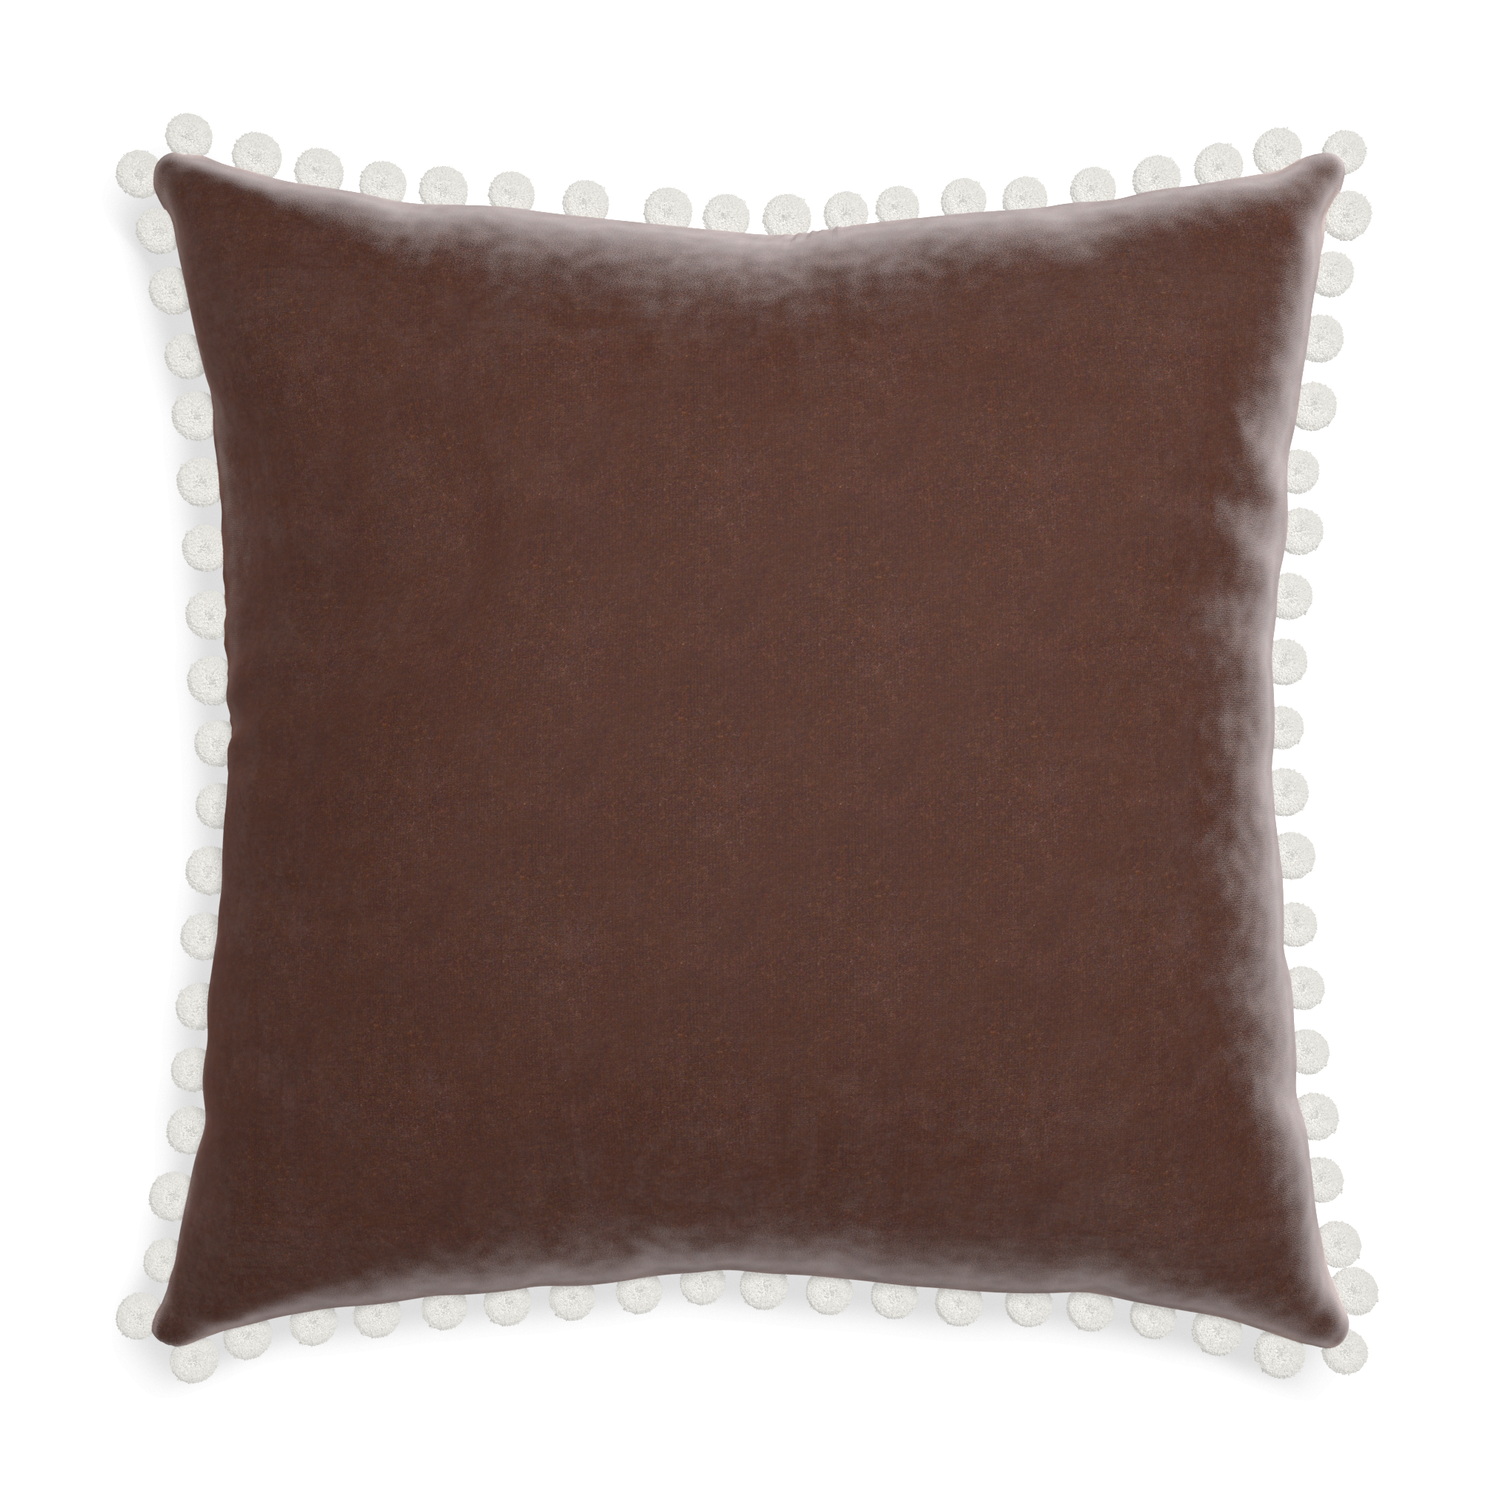 Euro-sham walnut velvet custom pillow with snow pom pom on white background